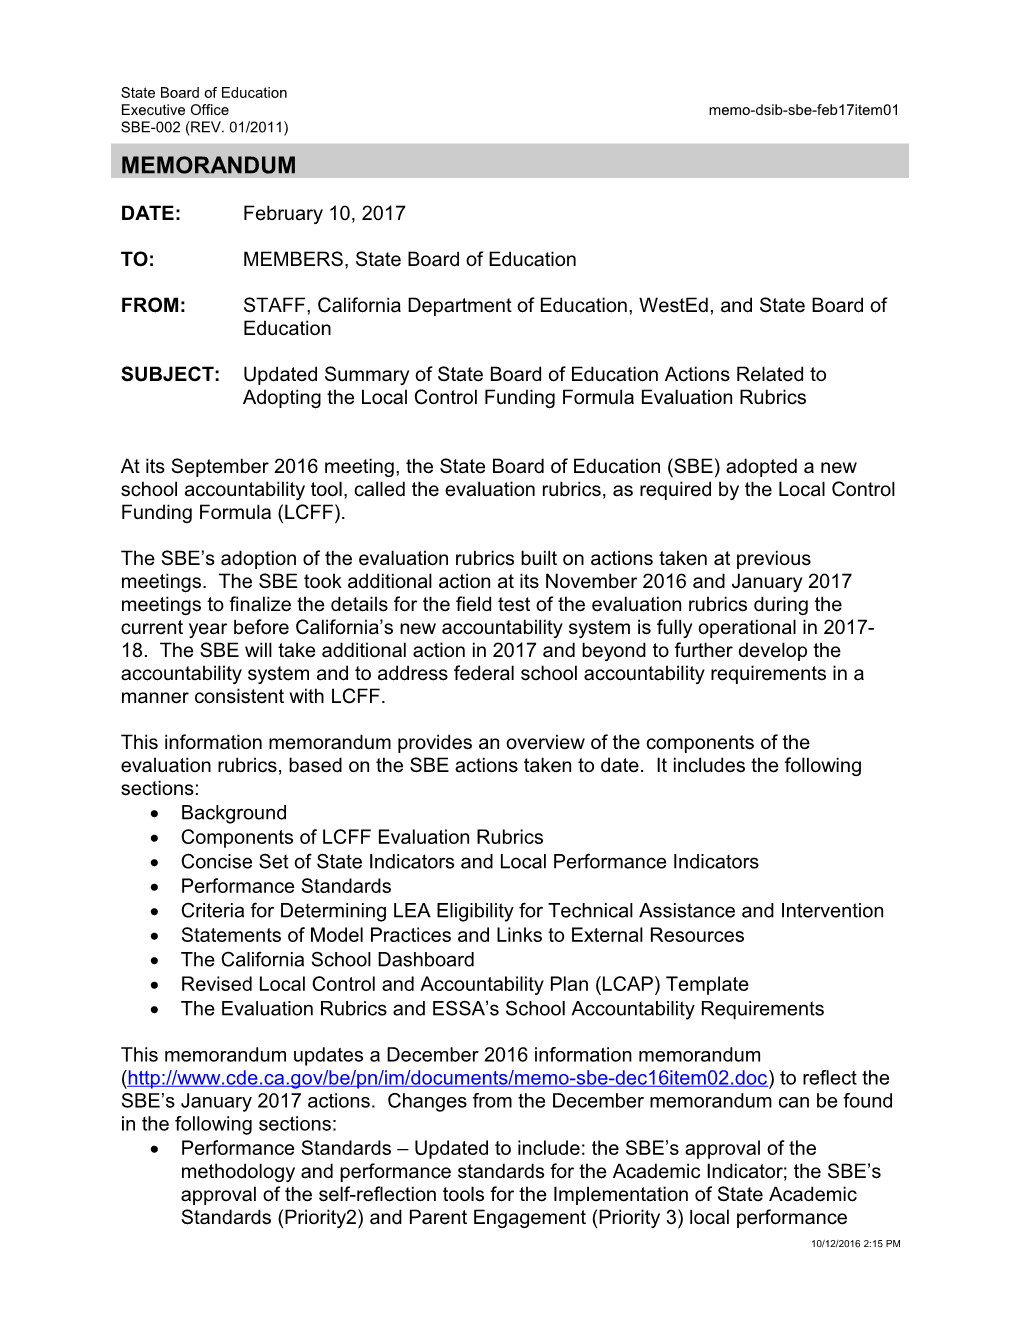 February 2017 Memorandum SBE Item 01 - Information Memorandum (CA State Board of Education)